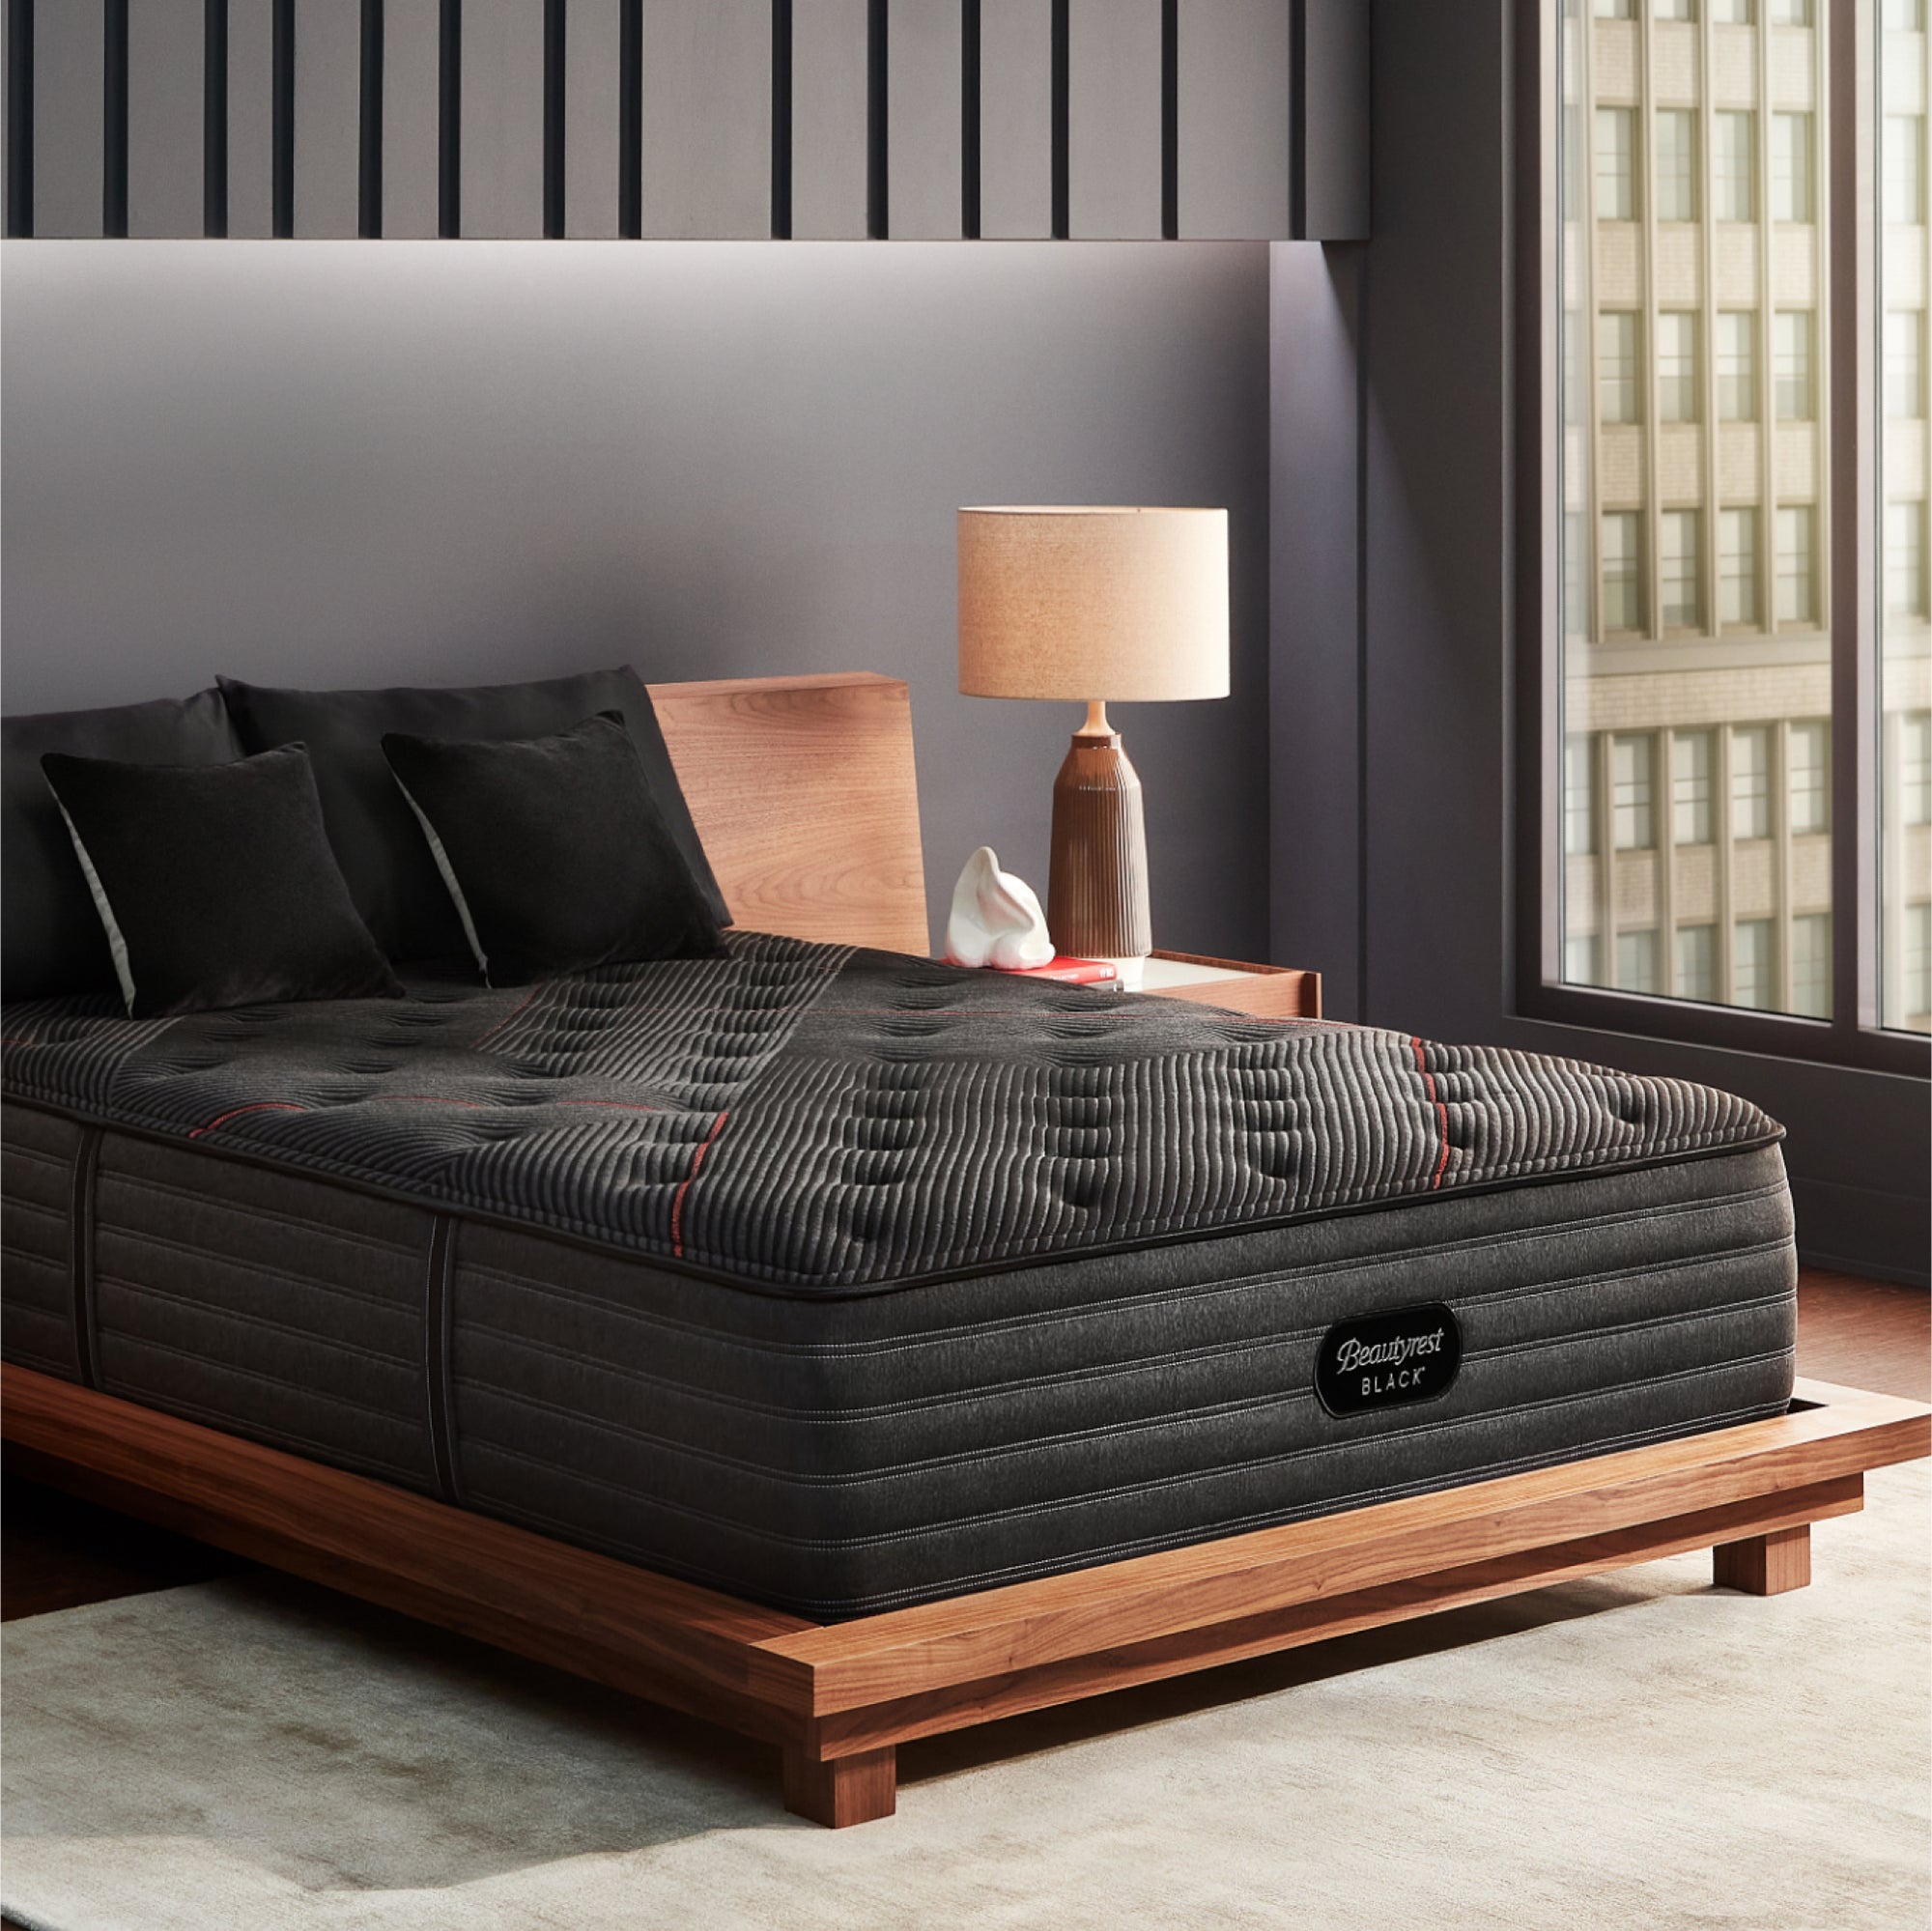 The Beautyrest Black deluxe c-class mattress ||series: deluxe c-class|| feel: medium